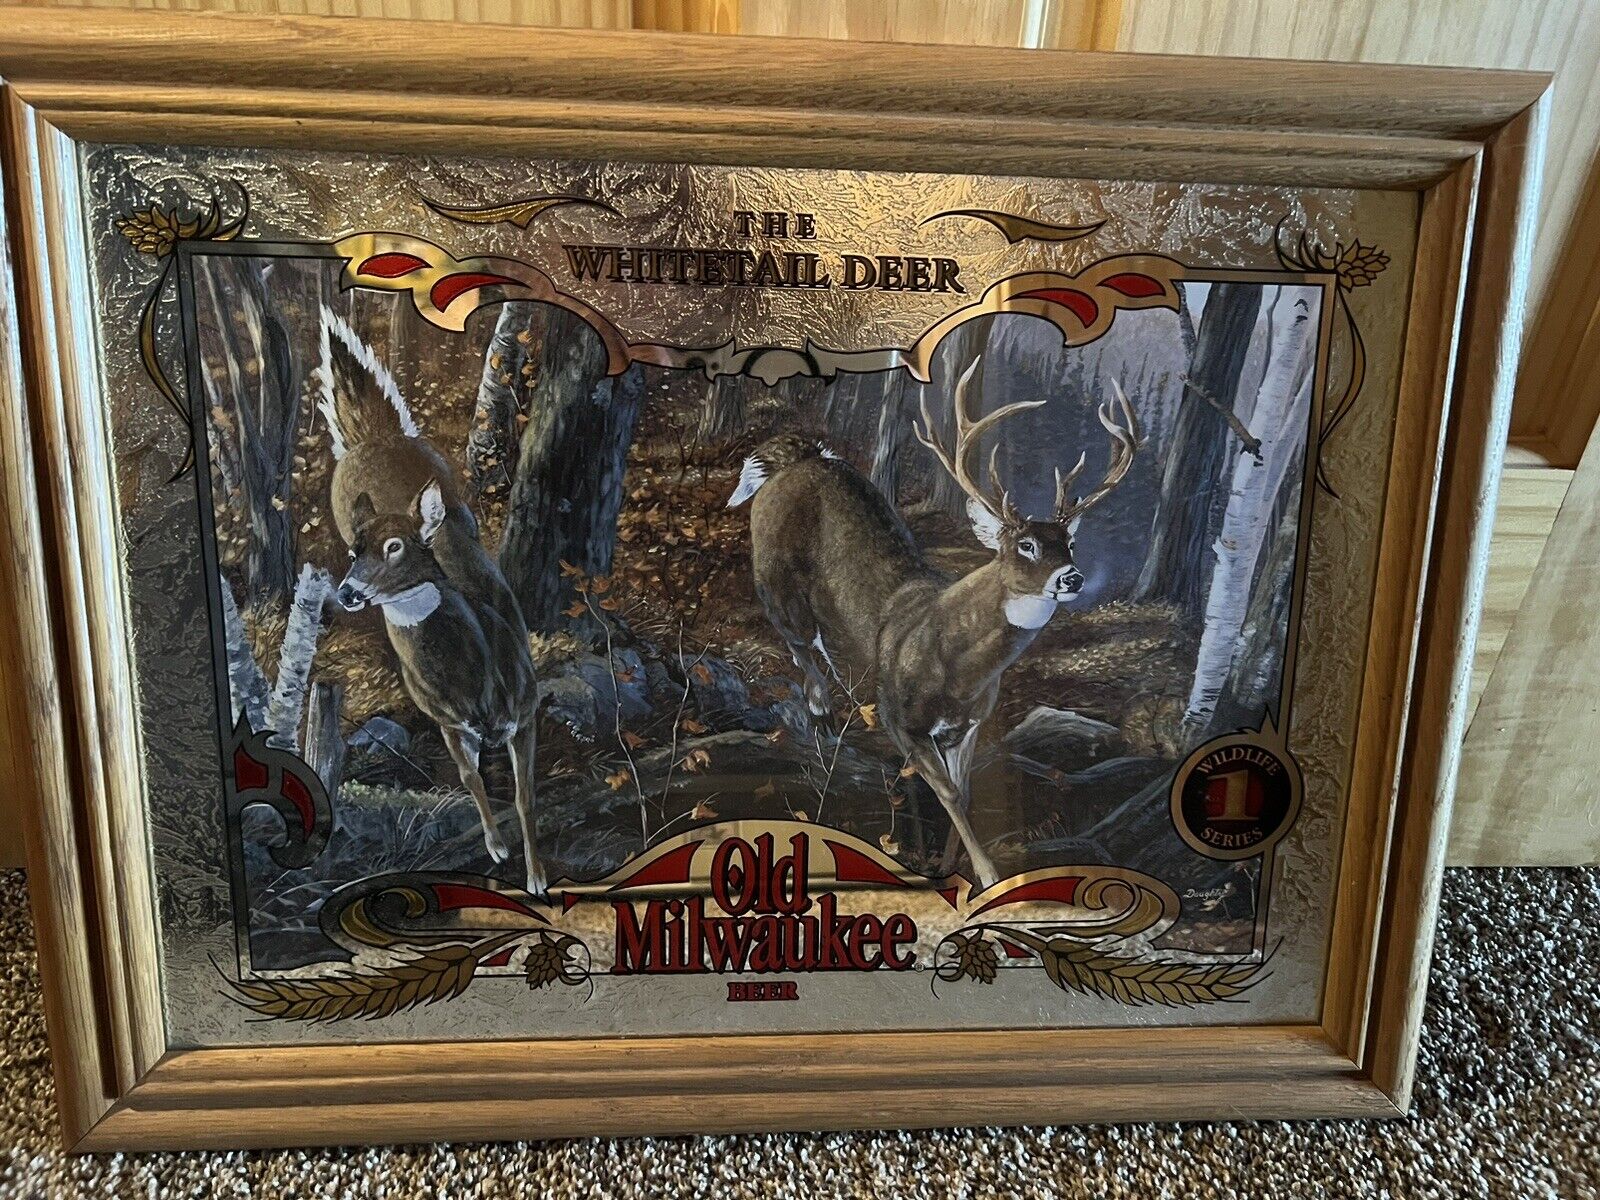 THE WHITETAIL DEER - Old Milwaukee beer Mirror